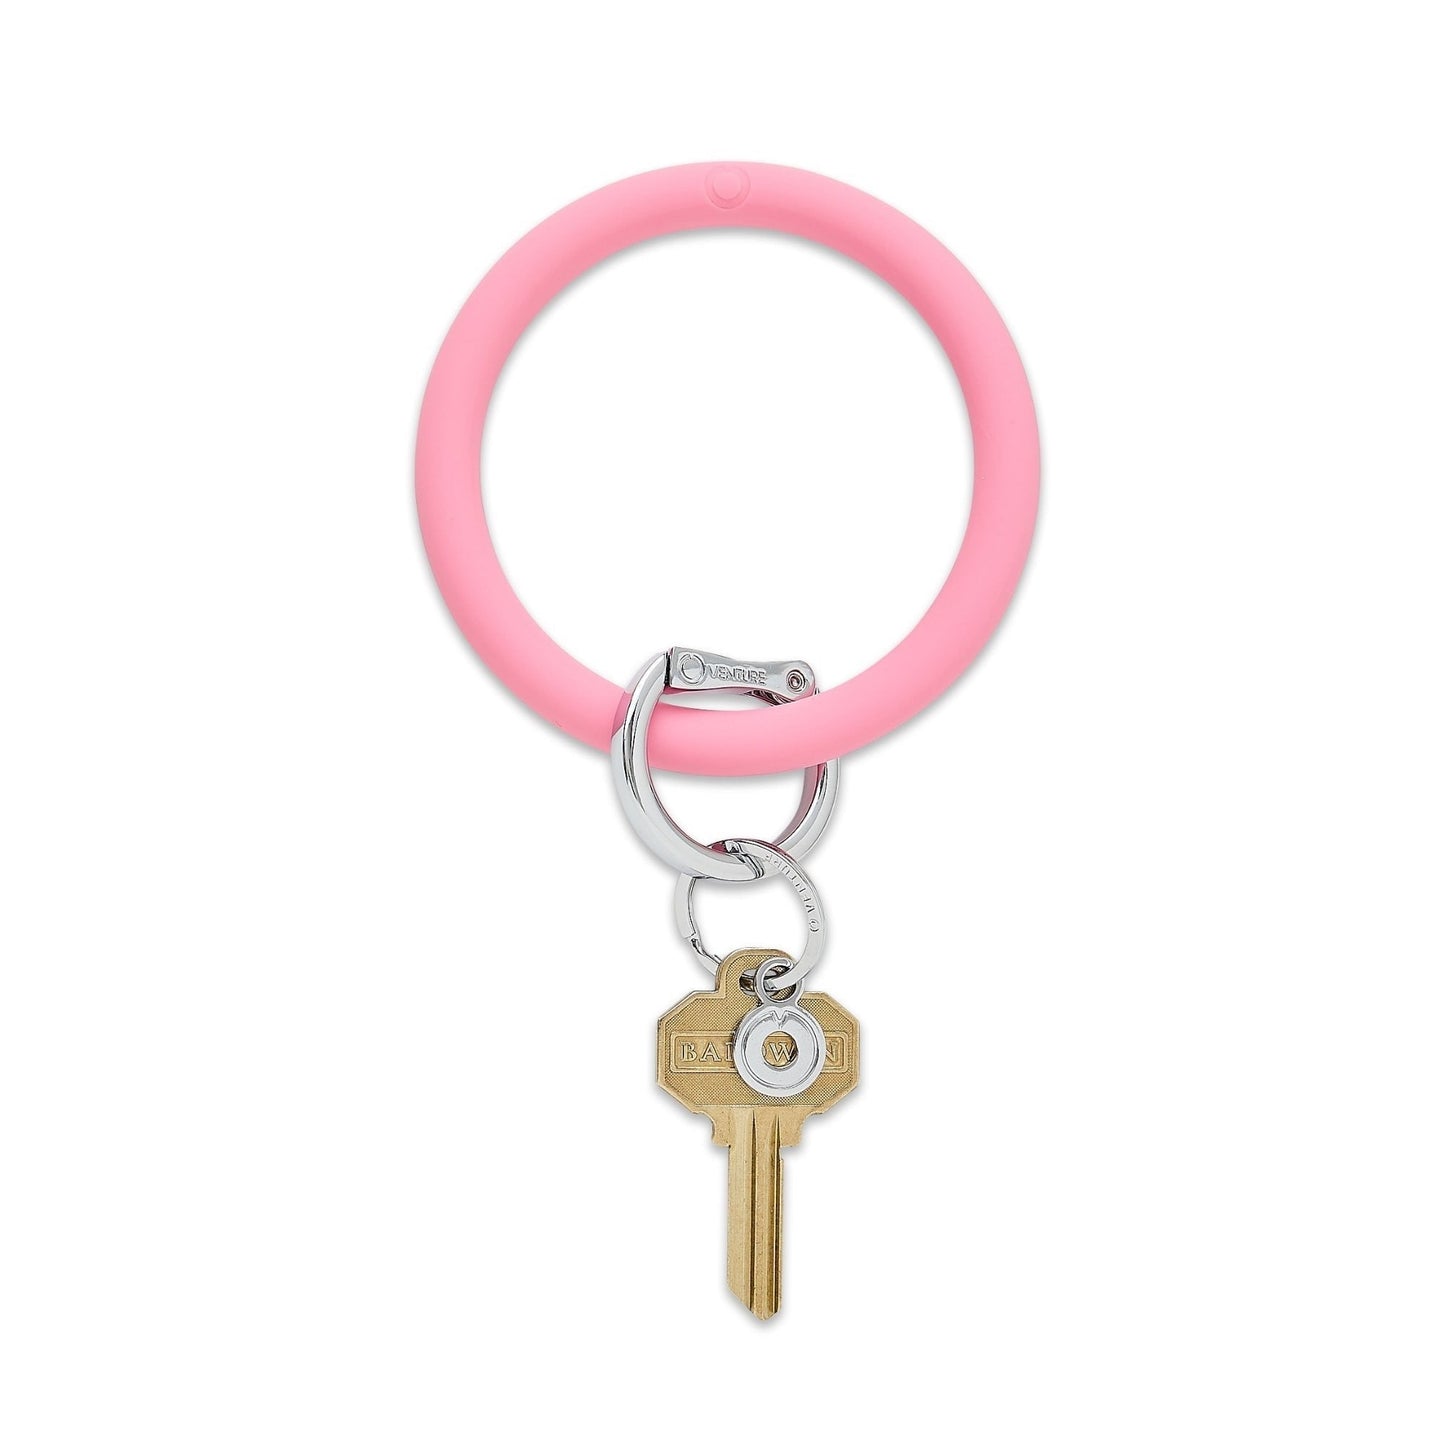 Big O Silicone Key Ring - Hot Pink